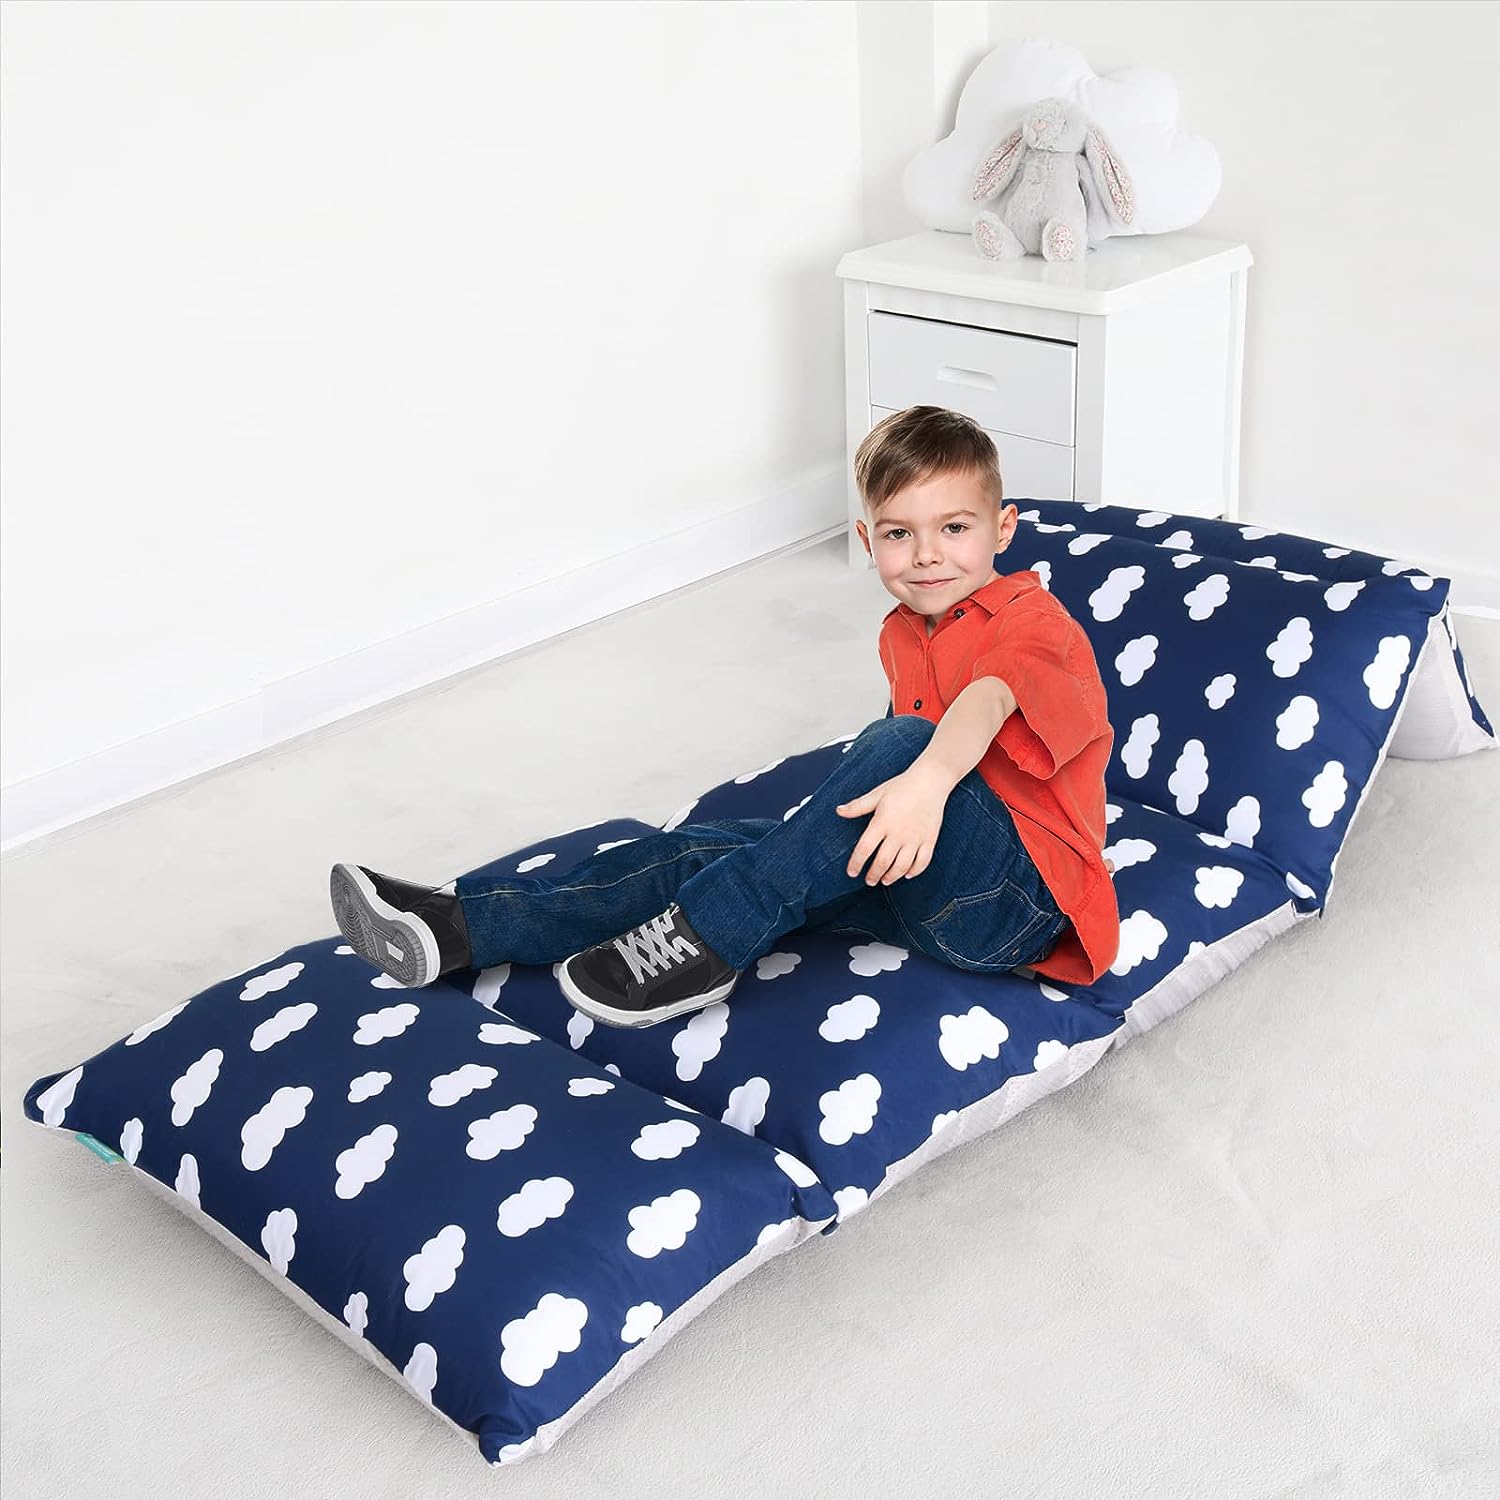 Kids Pillow Bed Floor Lounger Cover, Non-Slip and Super Soft, Queen/King Size, Navy Cloud - Biloban Online Store